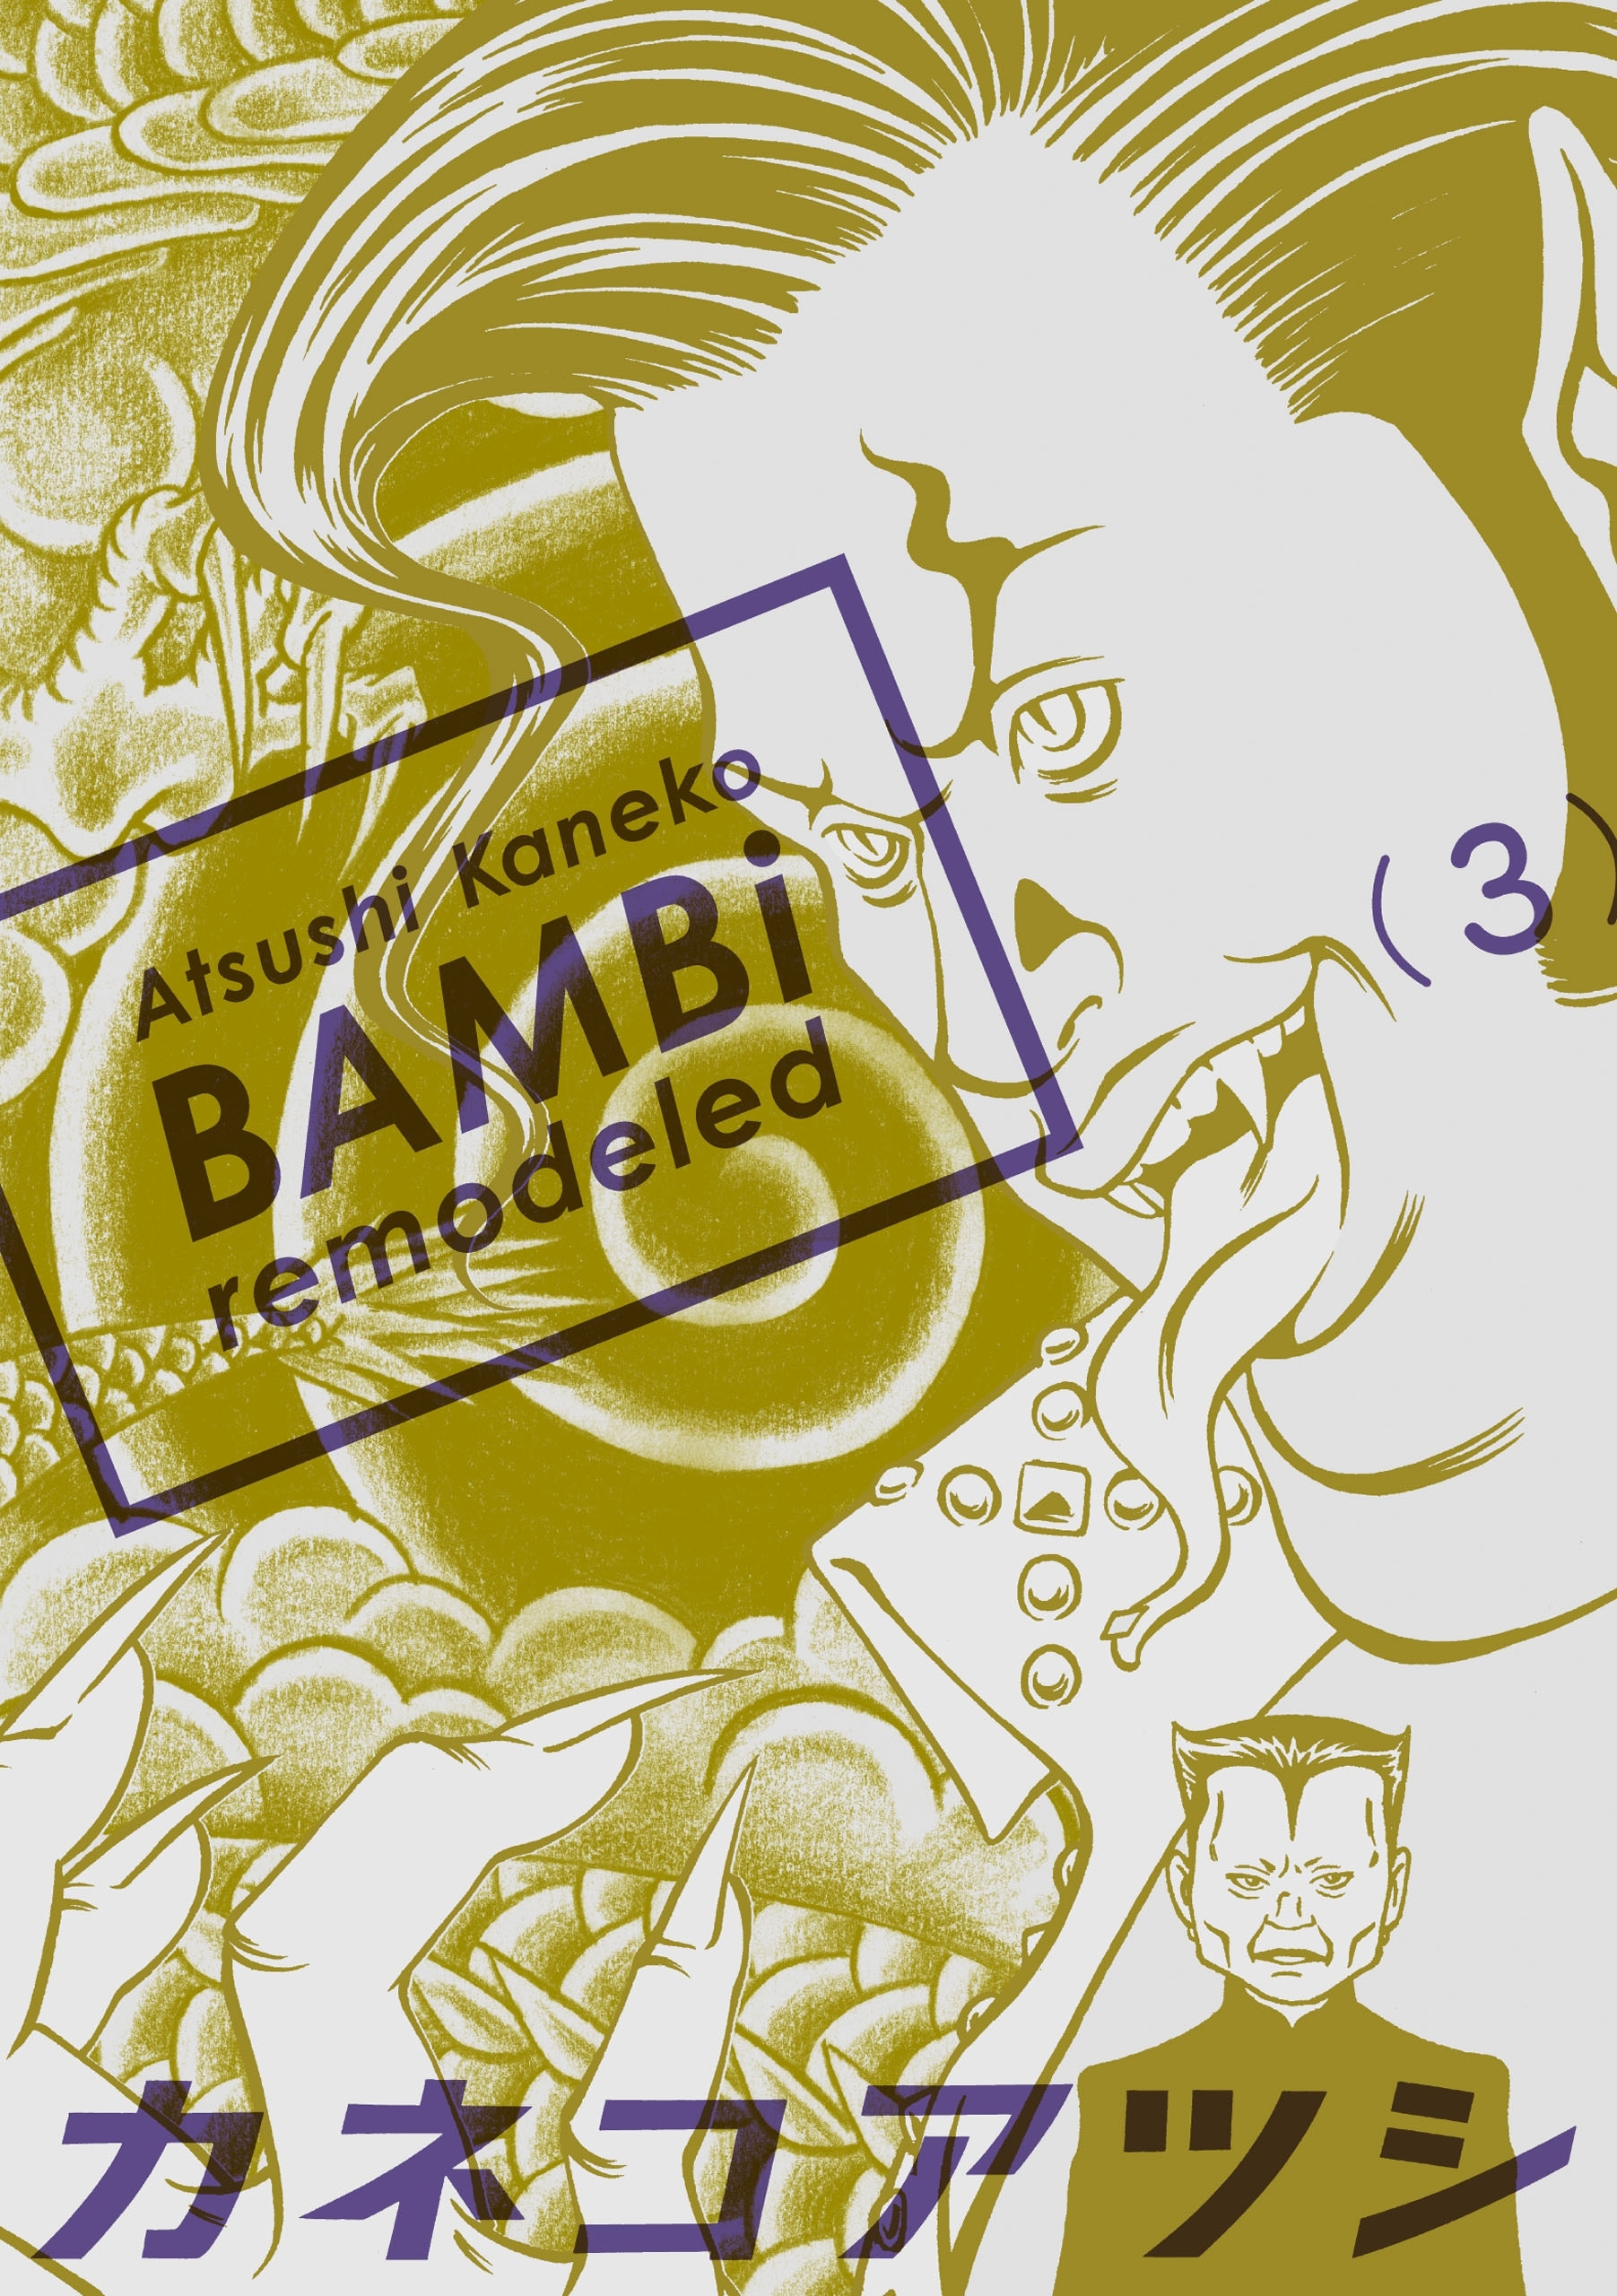 BAMBi remodeled全巻(1-6巻 完結)|カネコアツシ|人気漫画を無料で試し ...